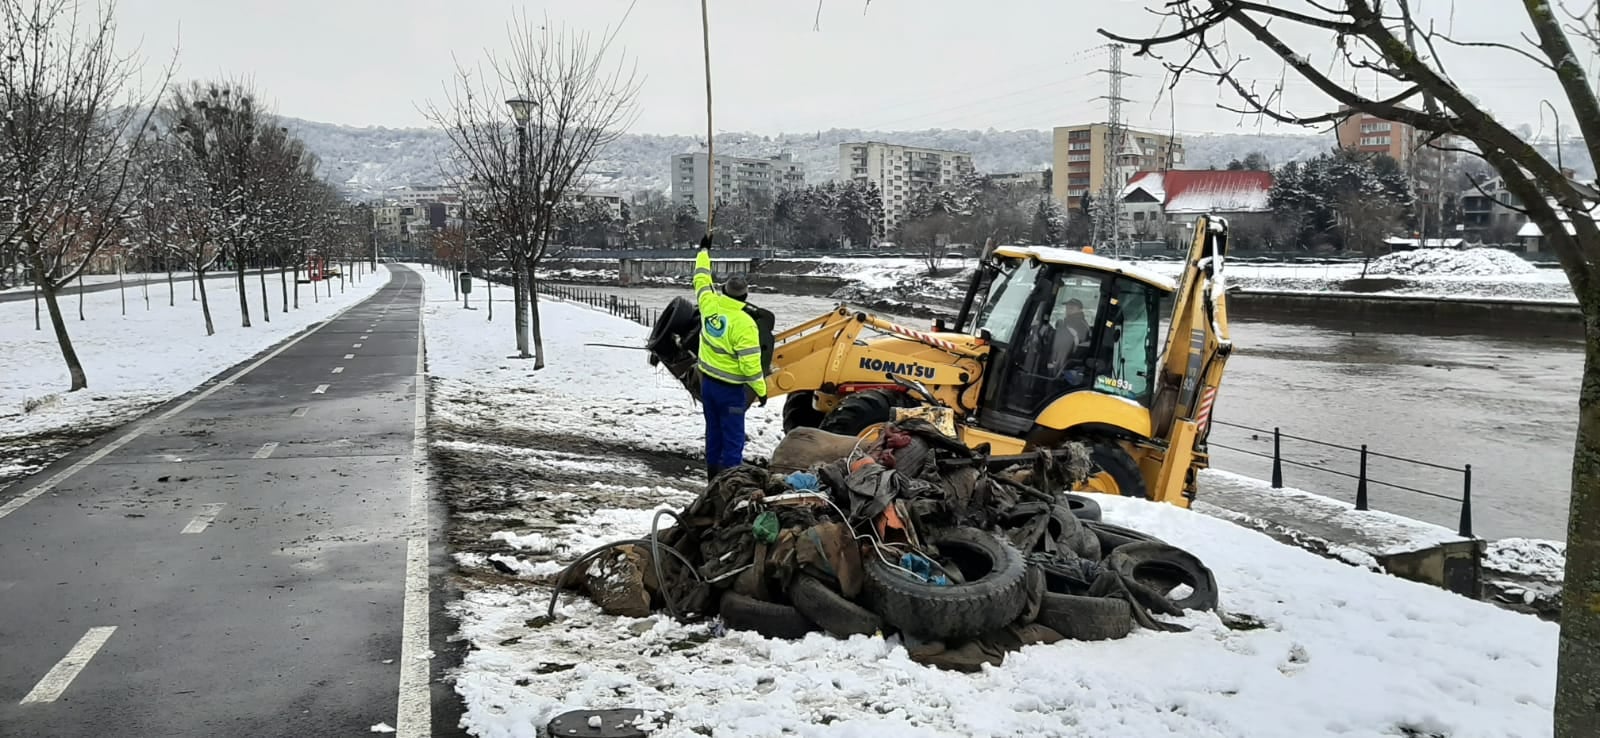 Curățenie pe Someș. Foto: Facebook/ Apele Române Someș-Tisa.